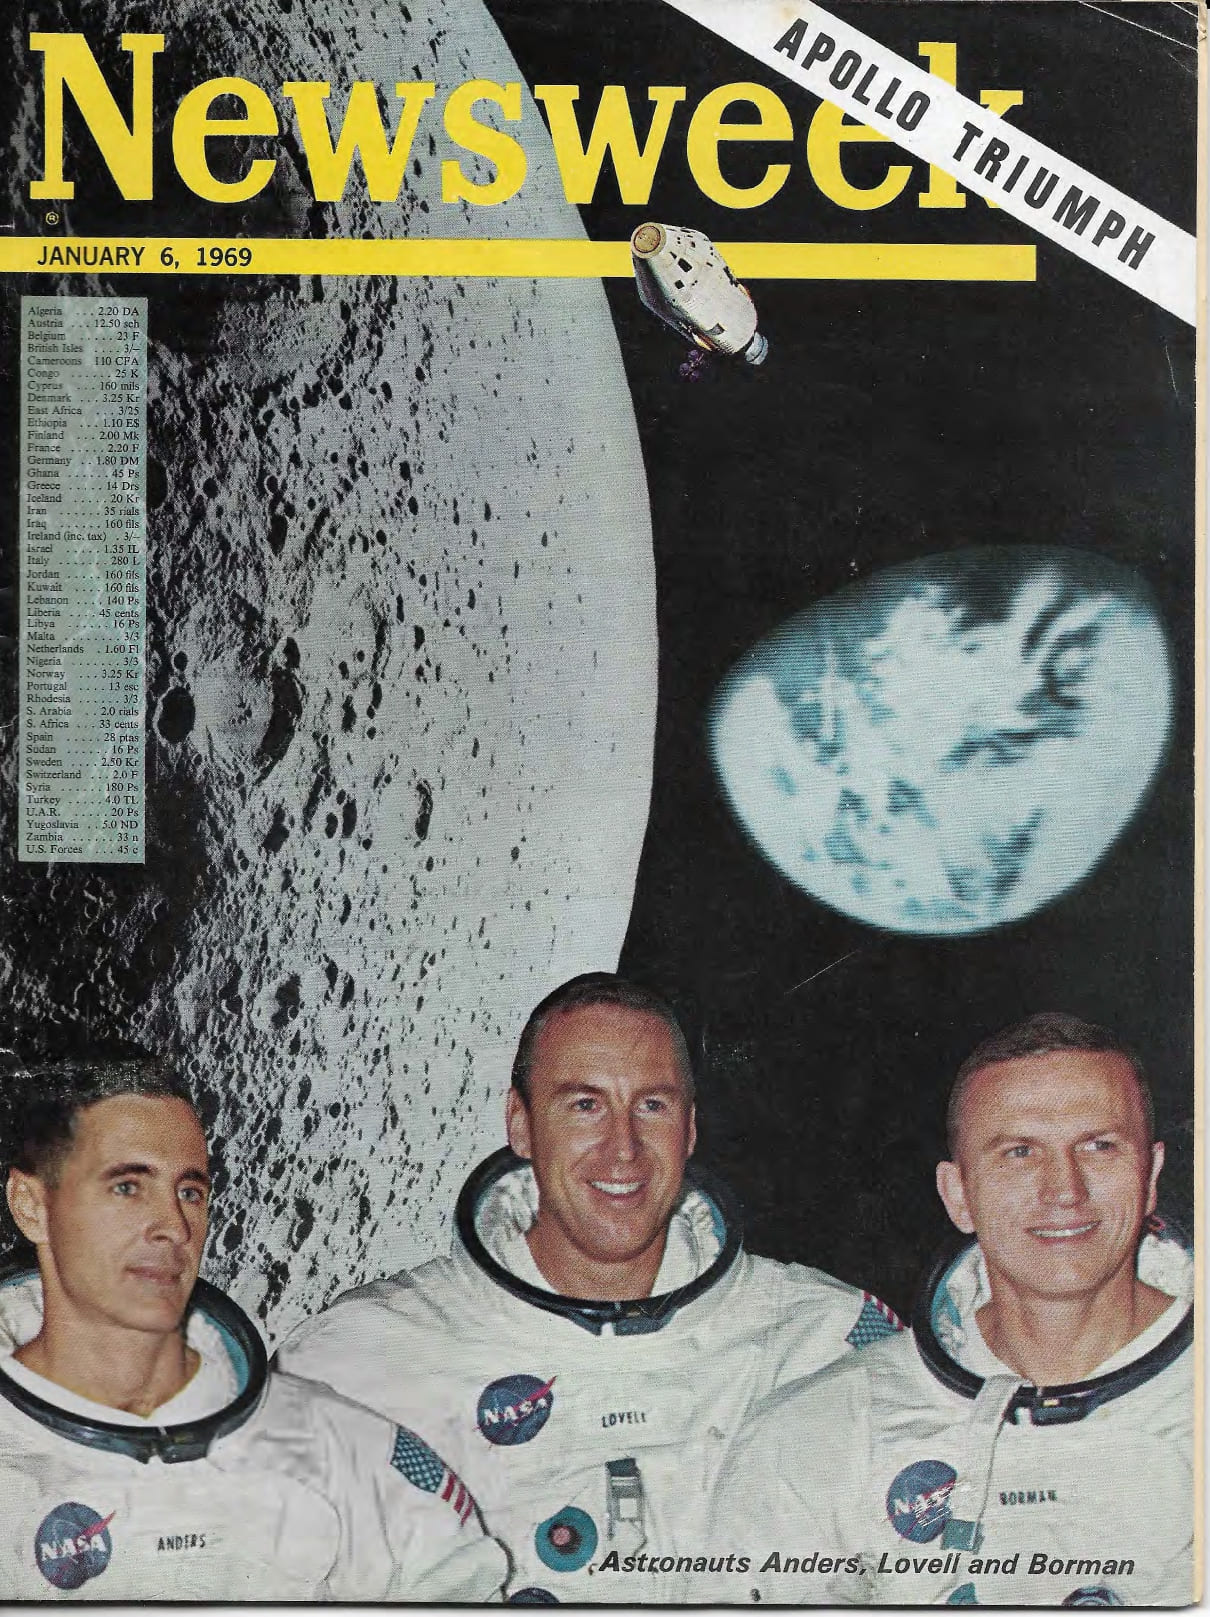 The Road to the Moon Landings – Apollo 8 – Newsweek, 1969